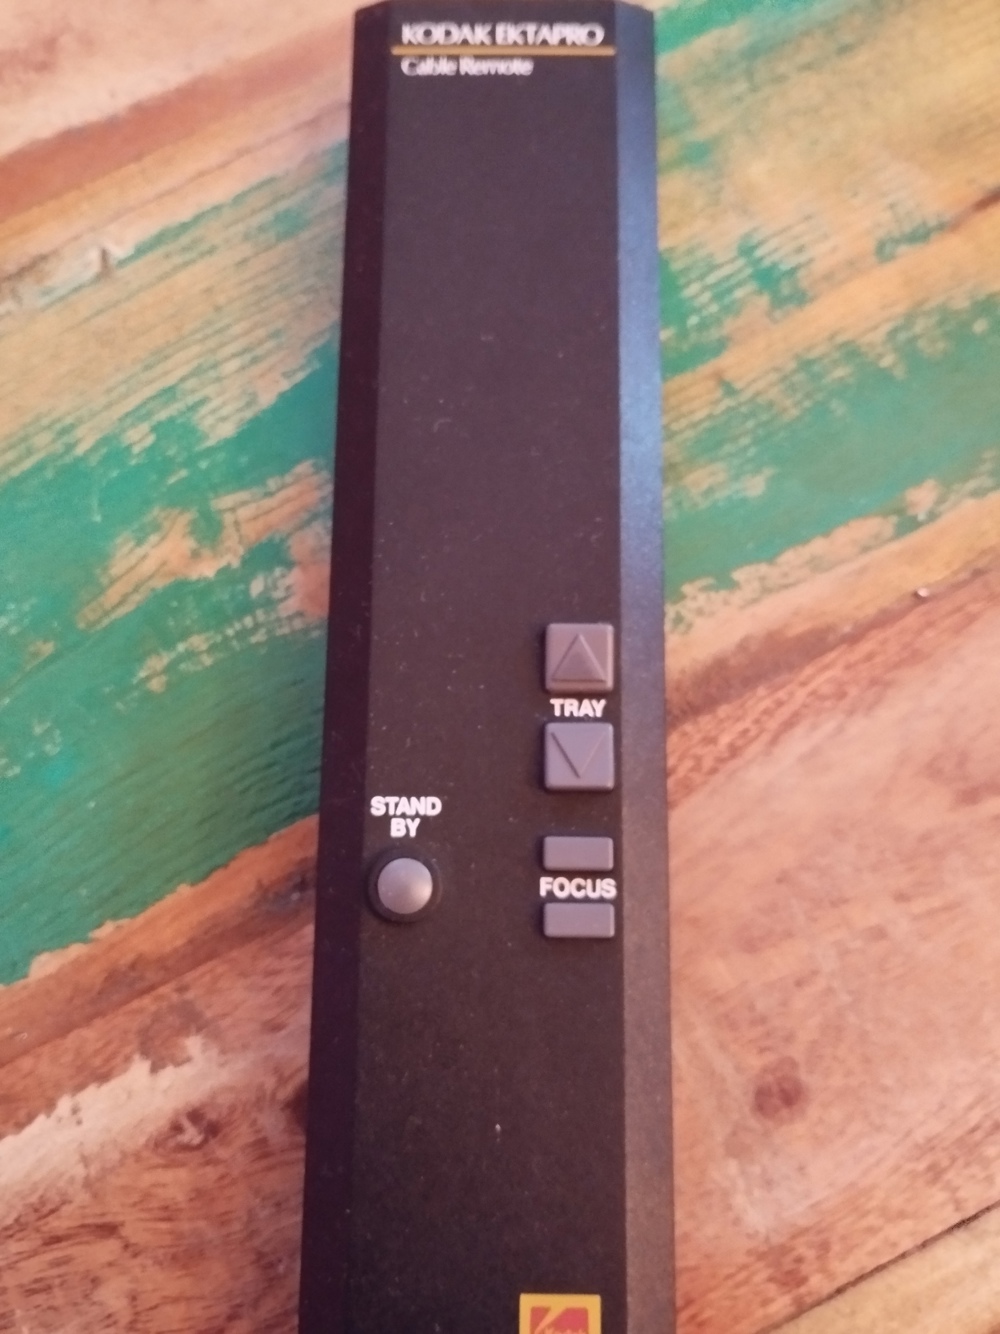 Kodak Ektapro Cable Remote Fernbedienung 